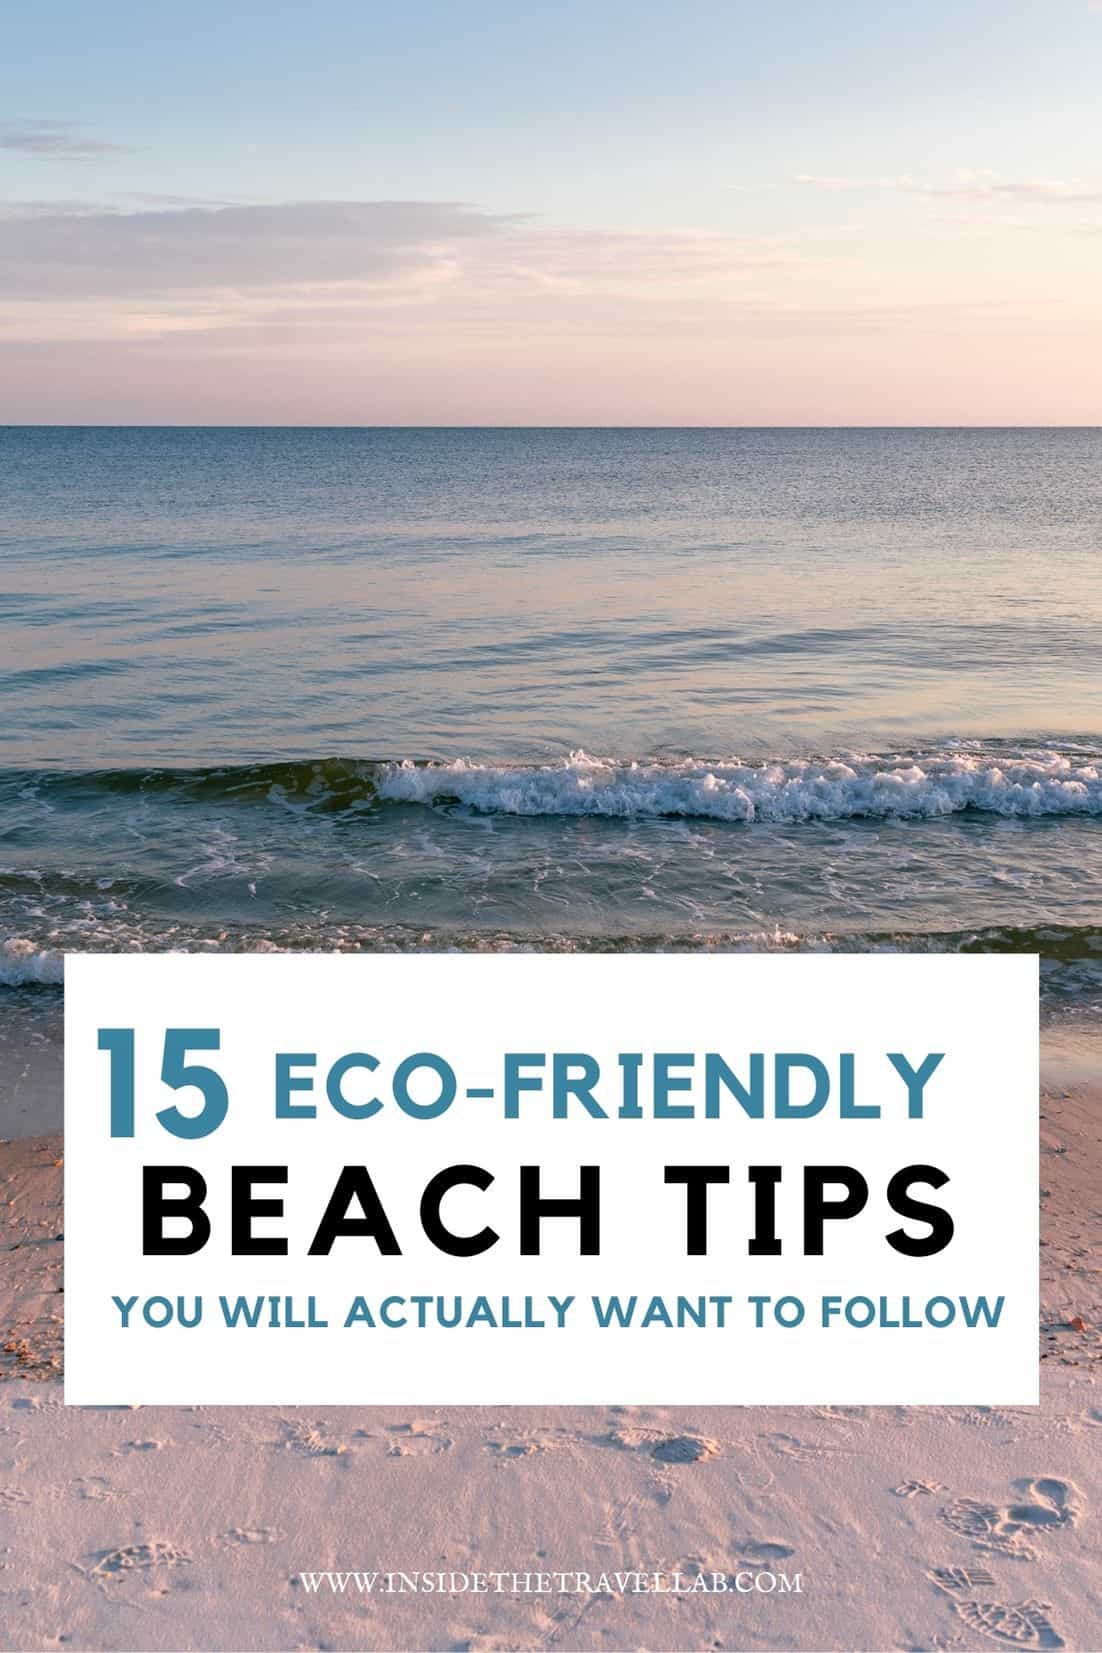 Beach Tips Cover Image - eco friendly beach tips